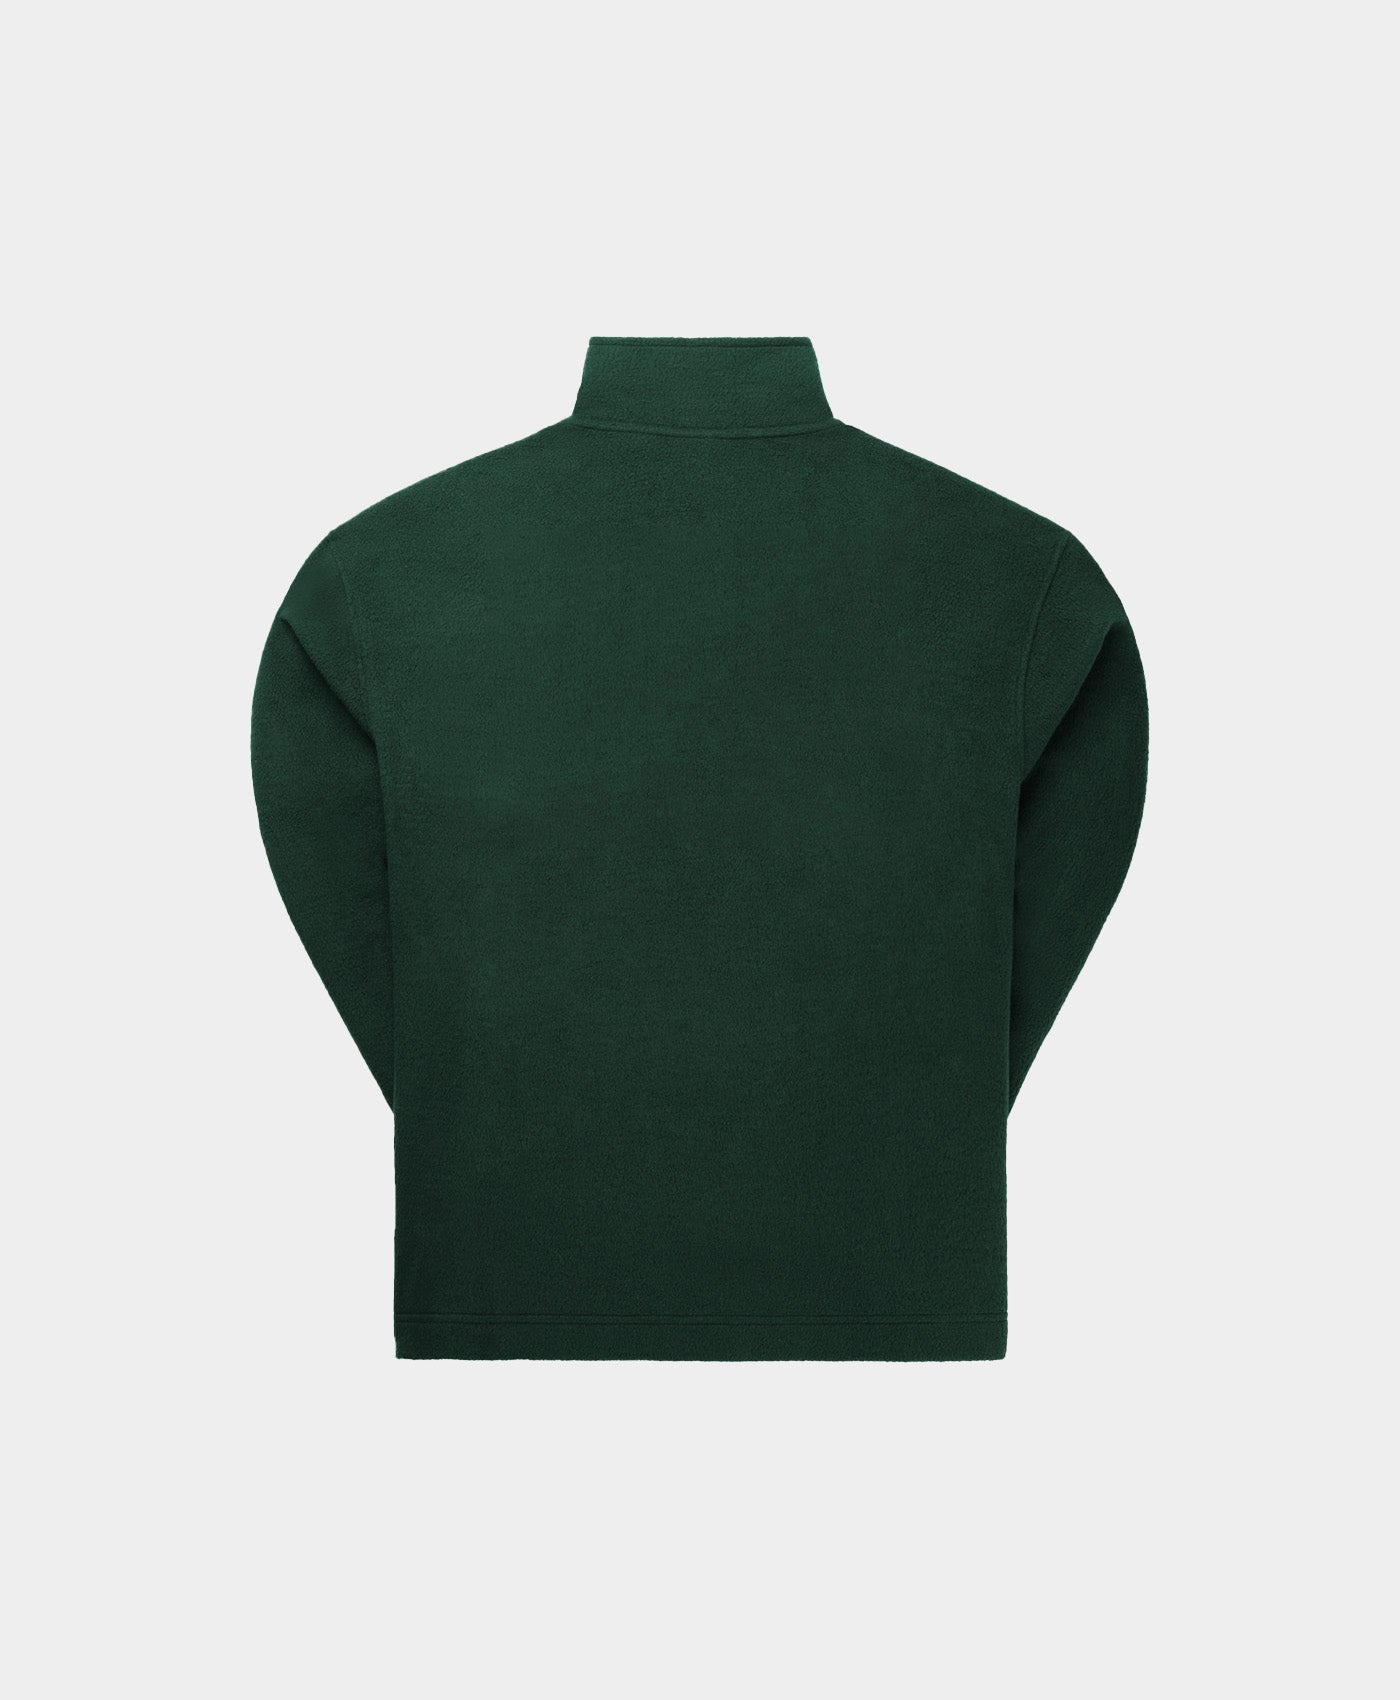 DP - Pine Green Ramat Sweater - Packshot - Rear